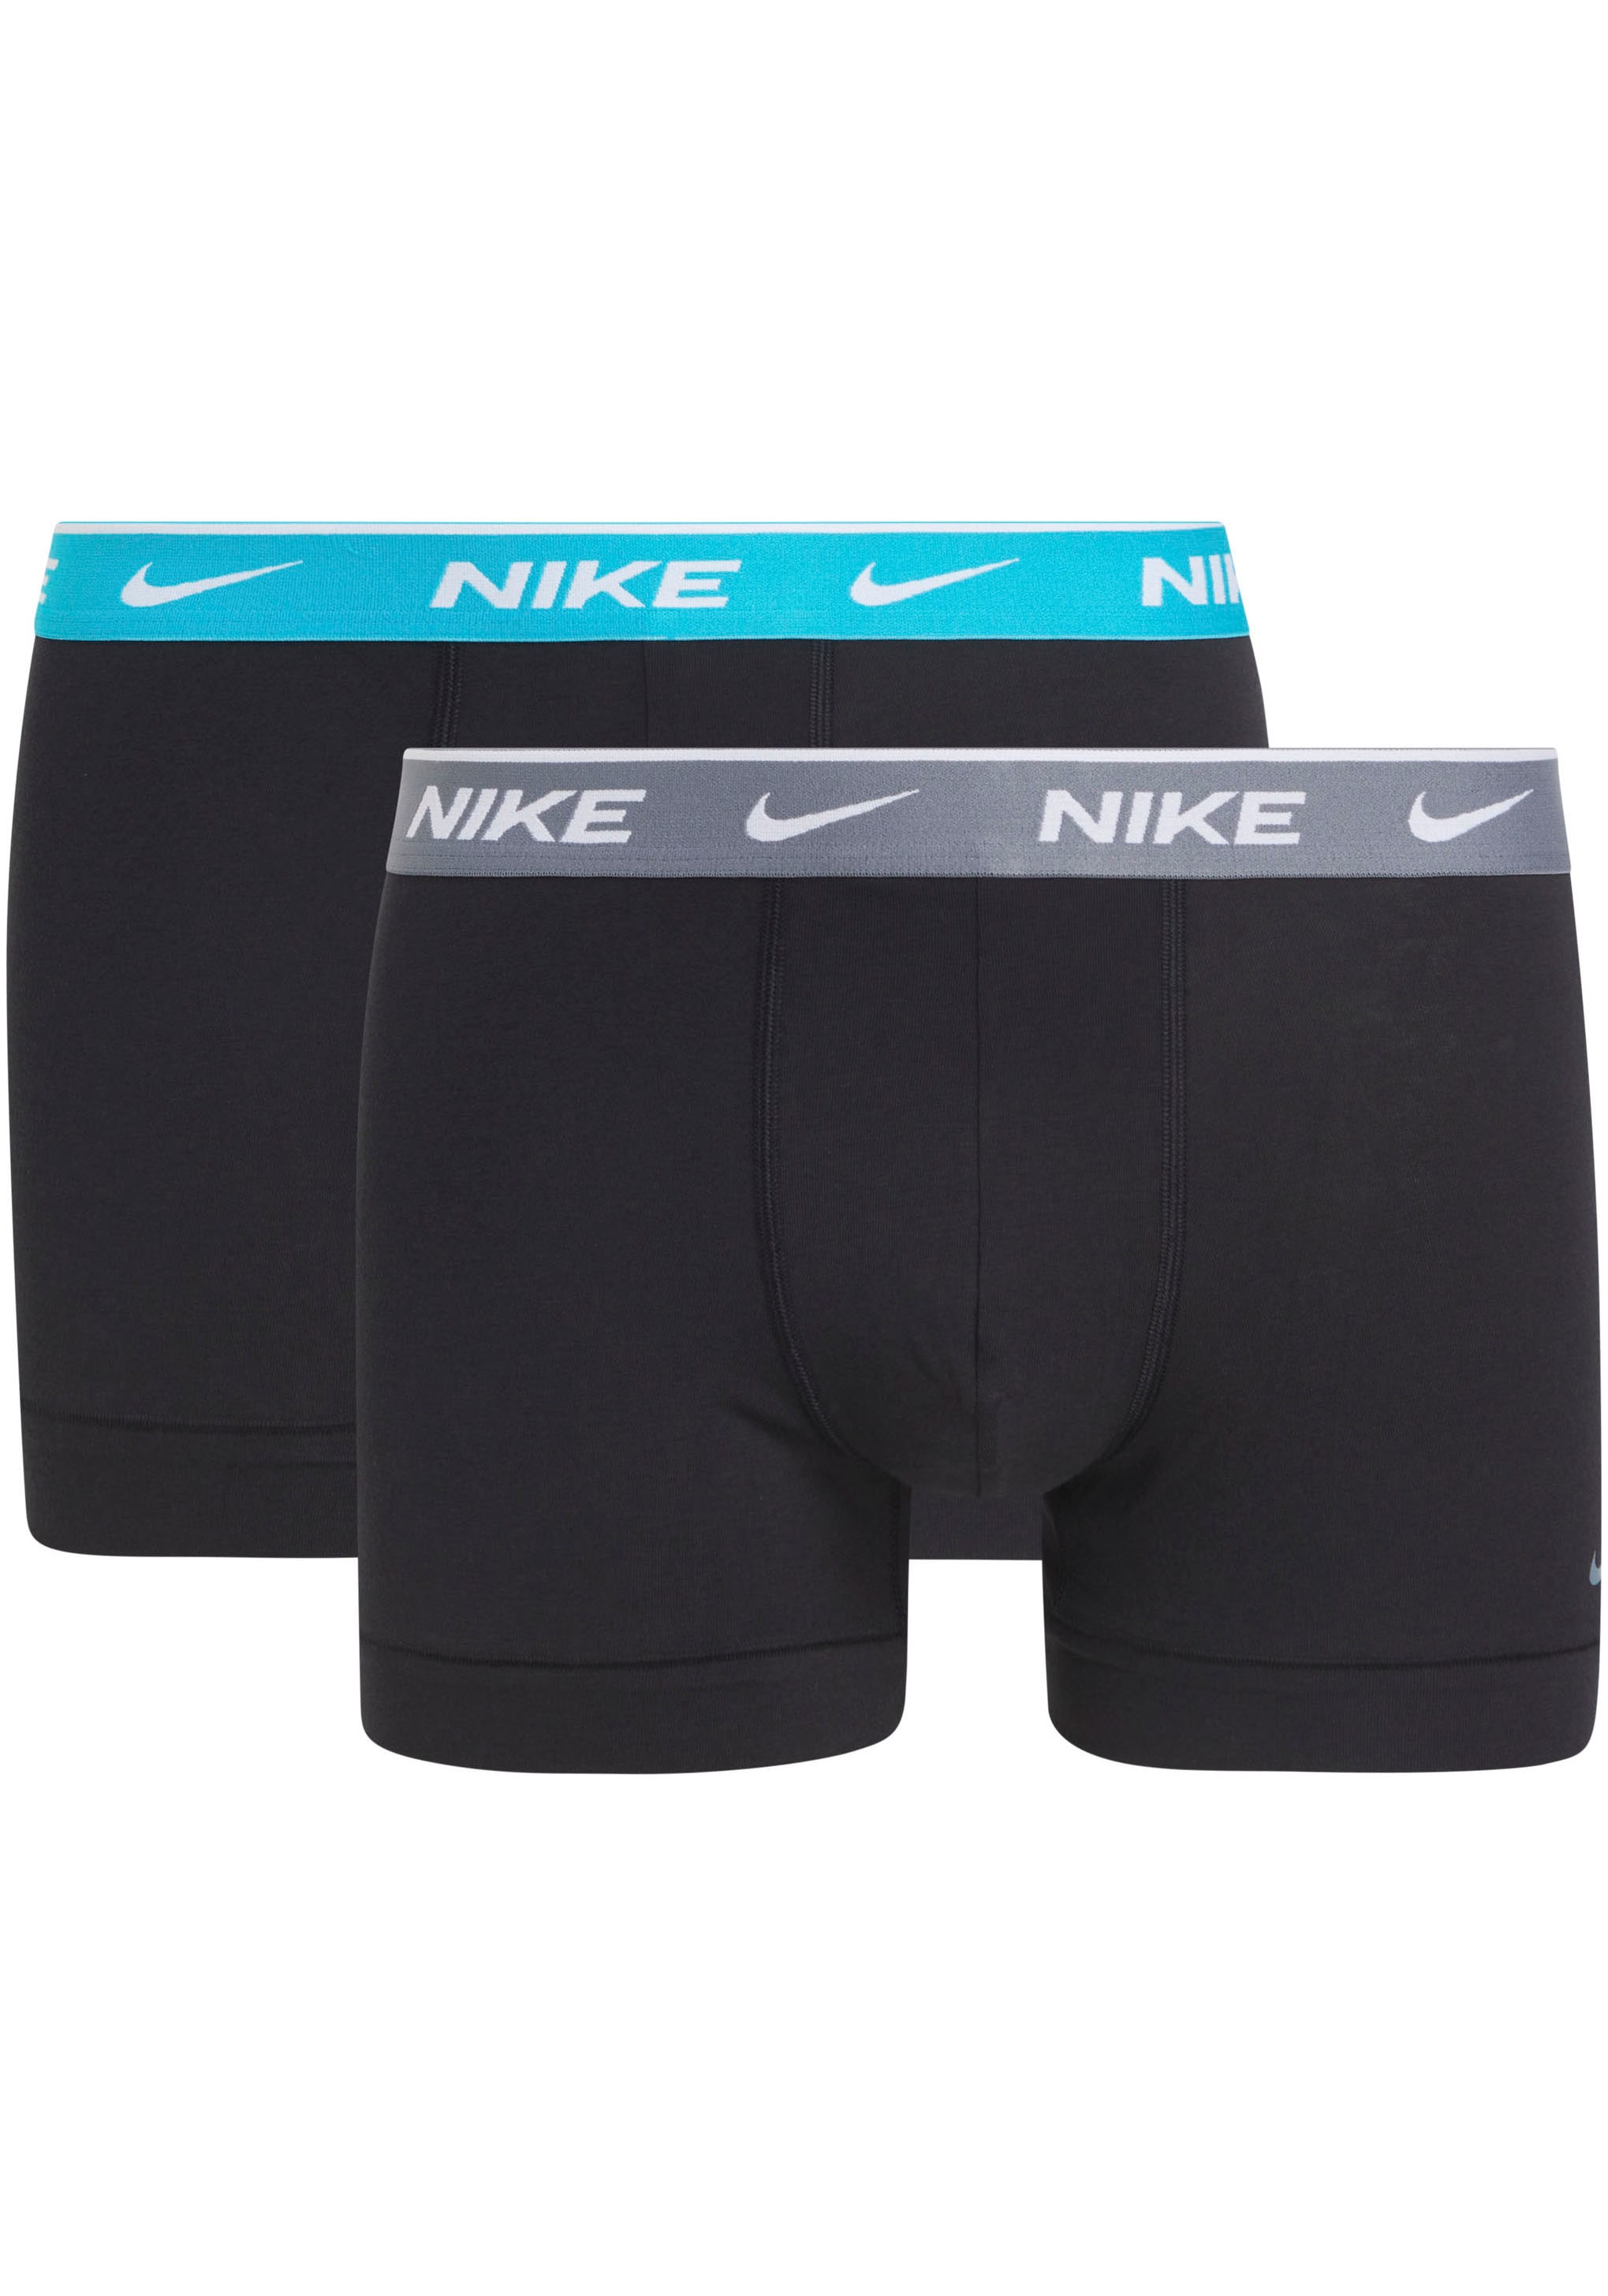 NIKE Underwear Trunk »TRUNK 2PK«, (Packung, 2 St., 2er), mit NIKE Logo-Elastikbund